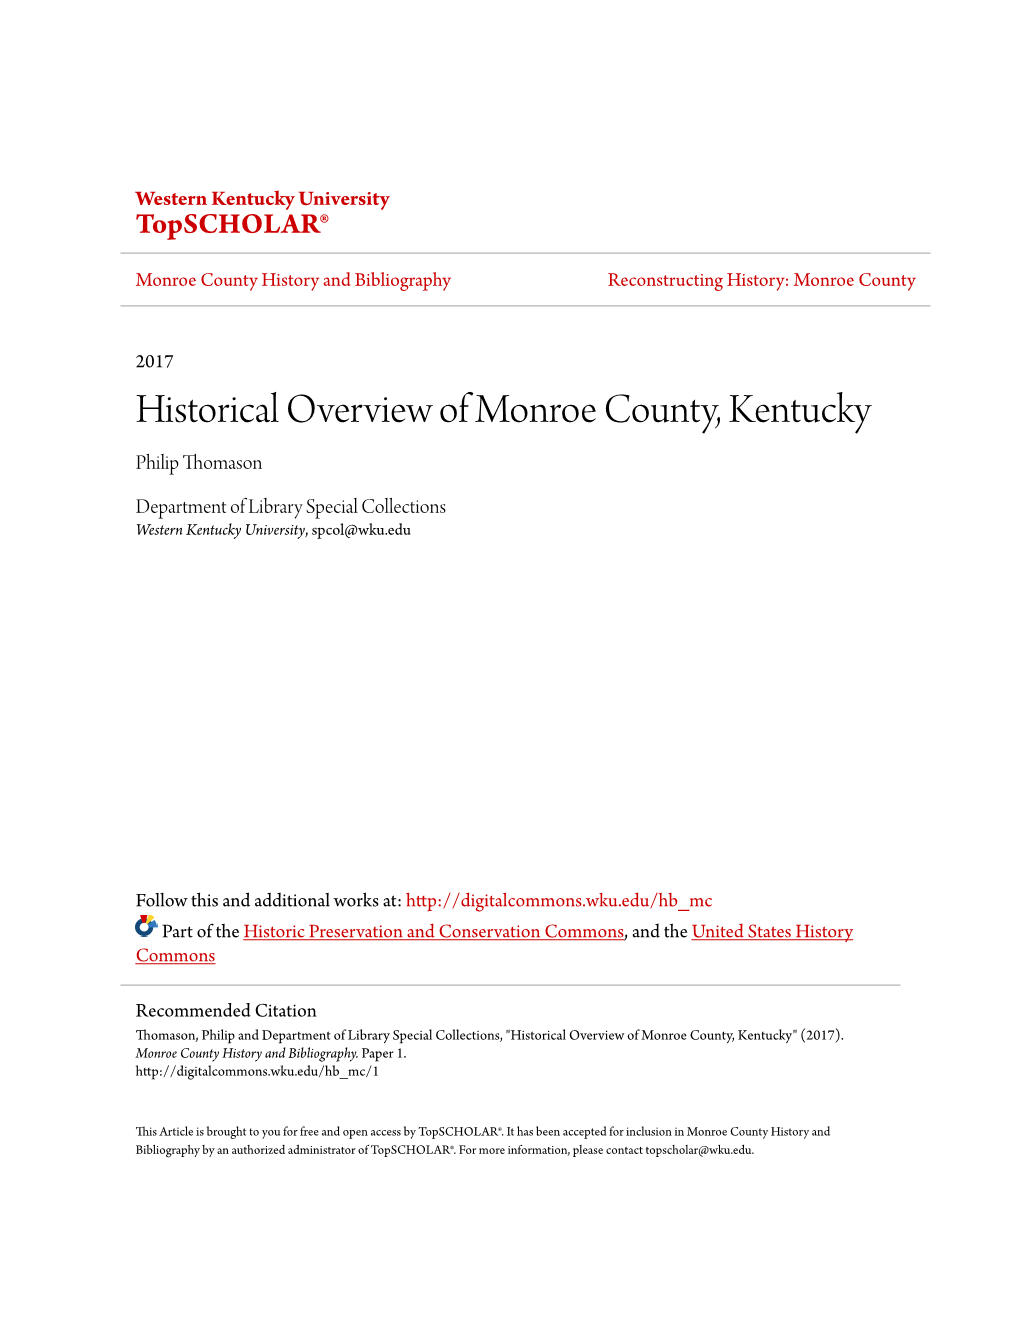 Historical Overview of Monroe County, Kentucky Philip Thomason